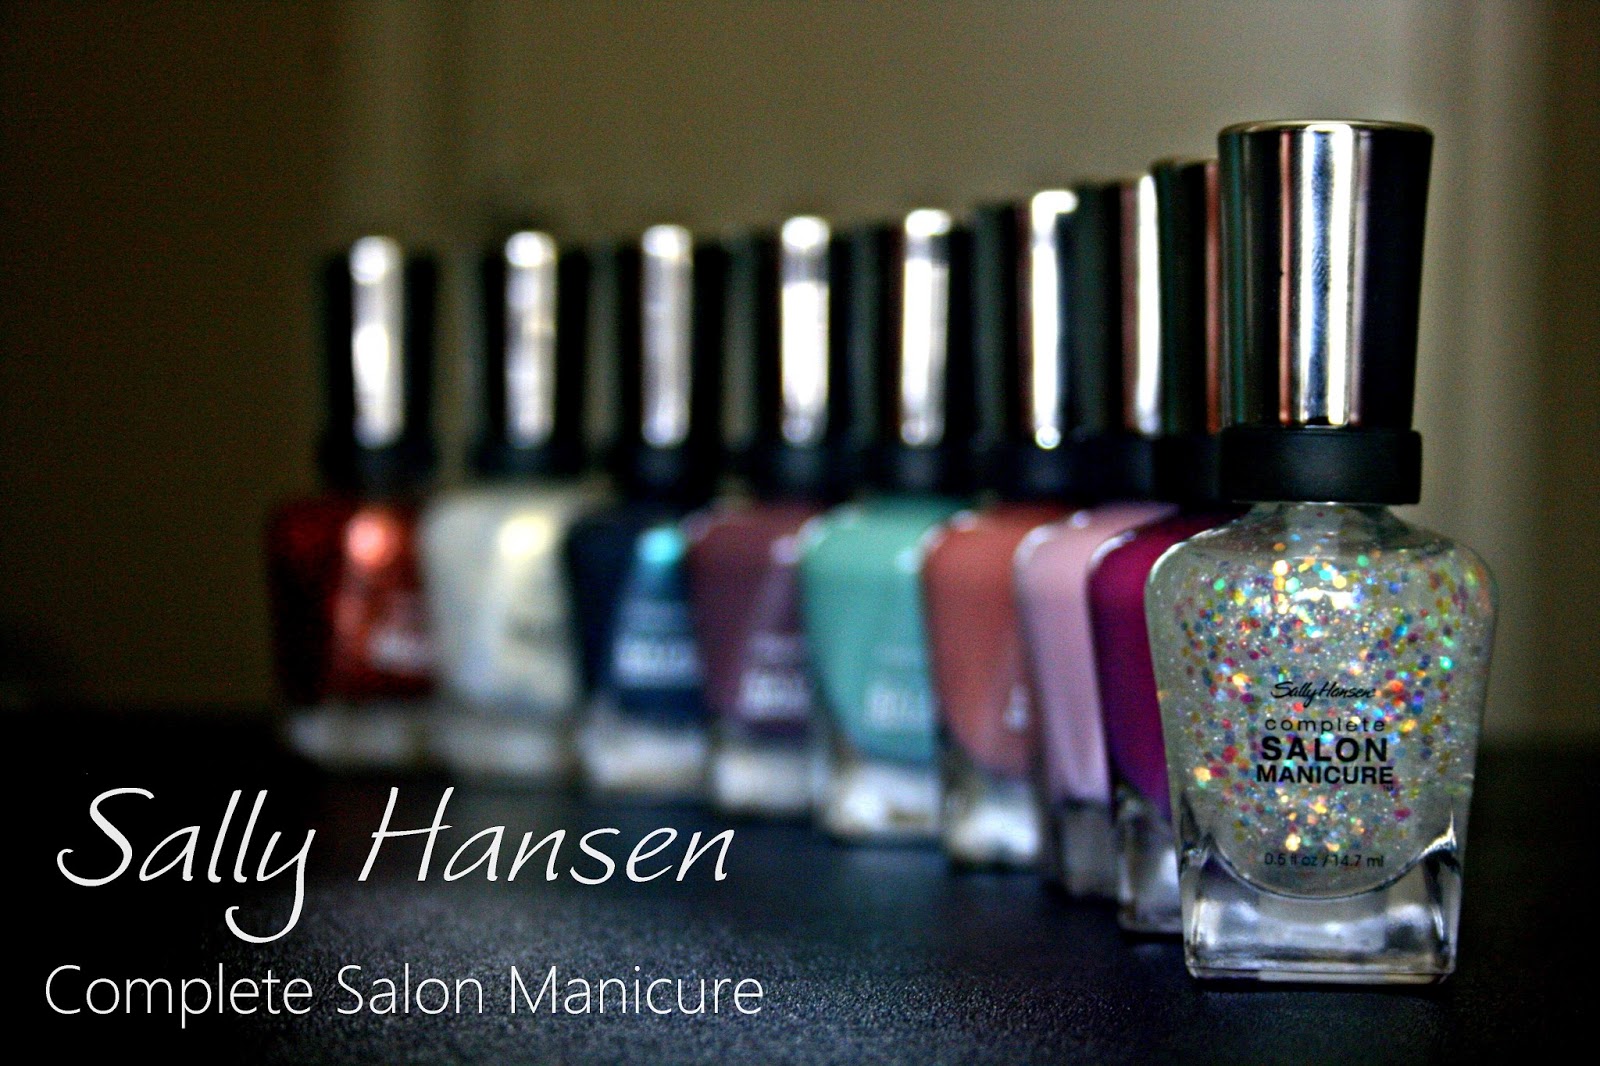 Sally Hansen Complete Salon Manicure Nail Polish - Silver Stallion - wide 1